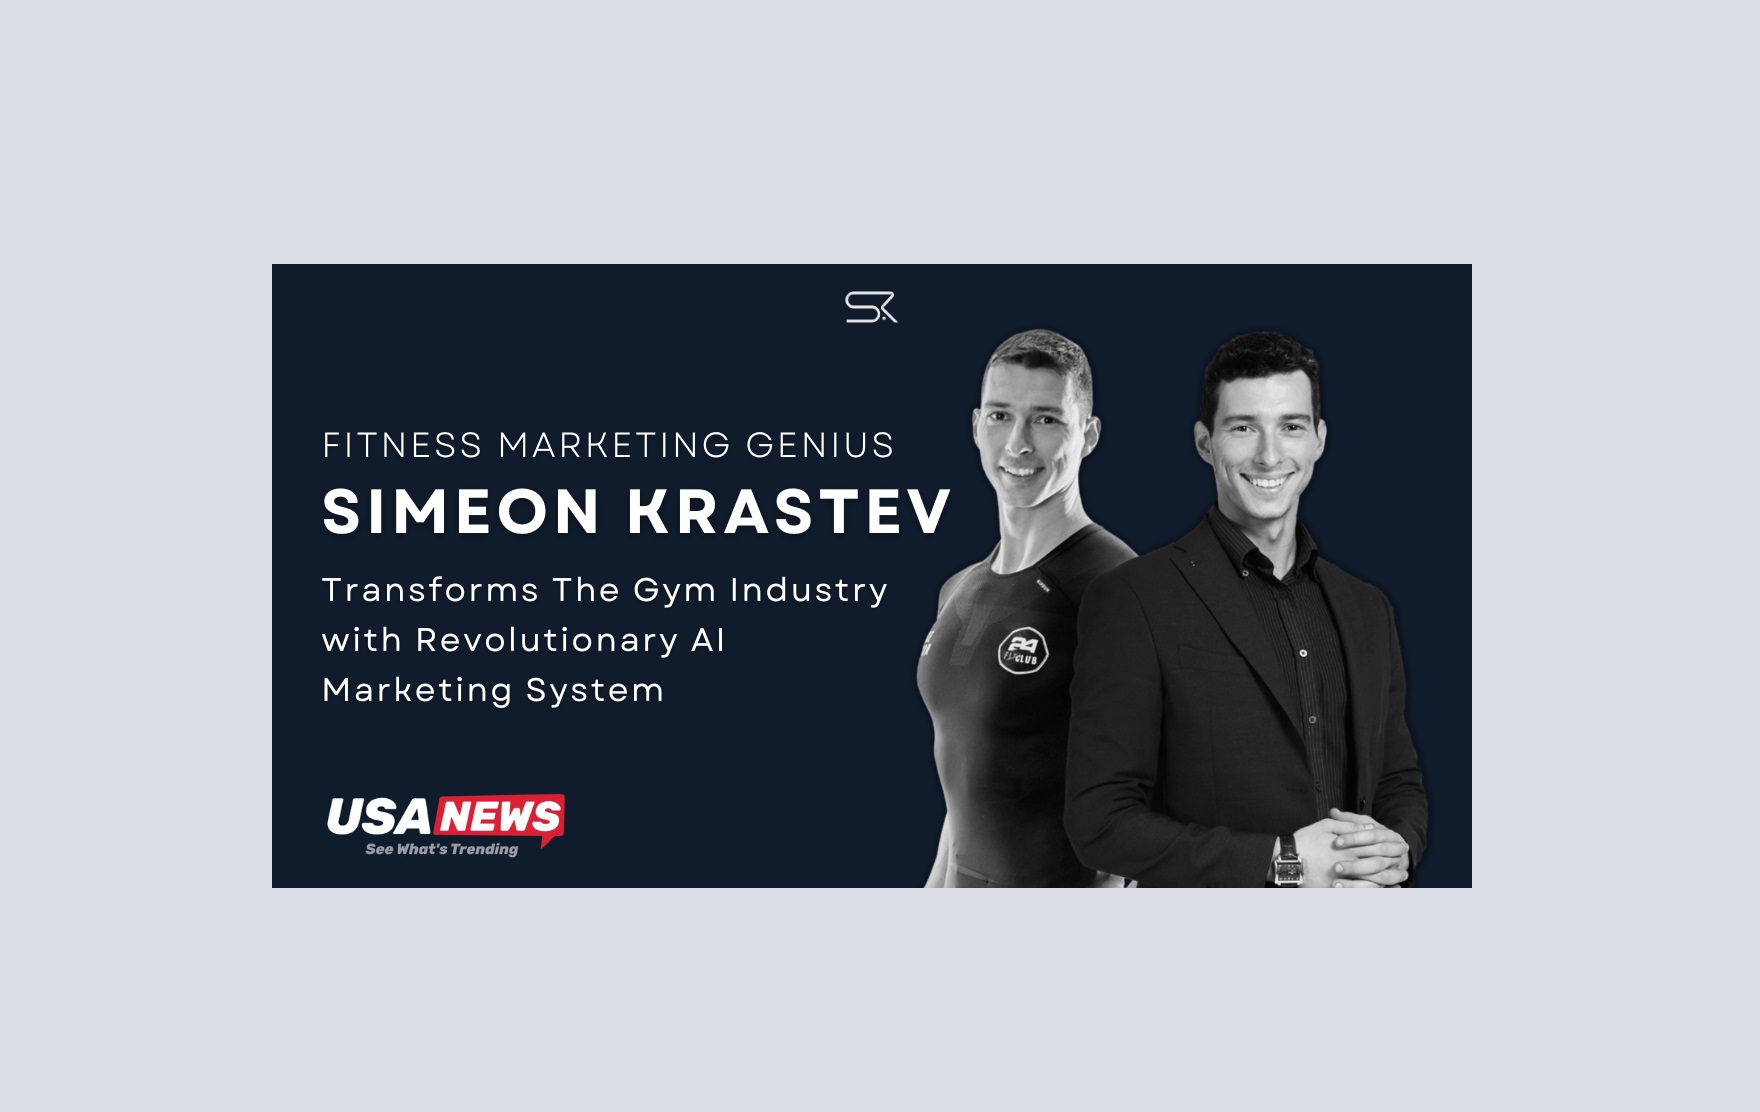 Fitness Marketing Genius Simeon Krastev Transforms Gym Industry with Revolutionary AI Marketing System